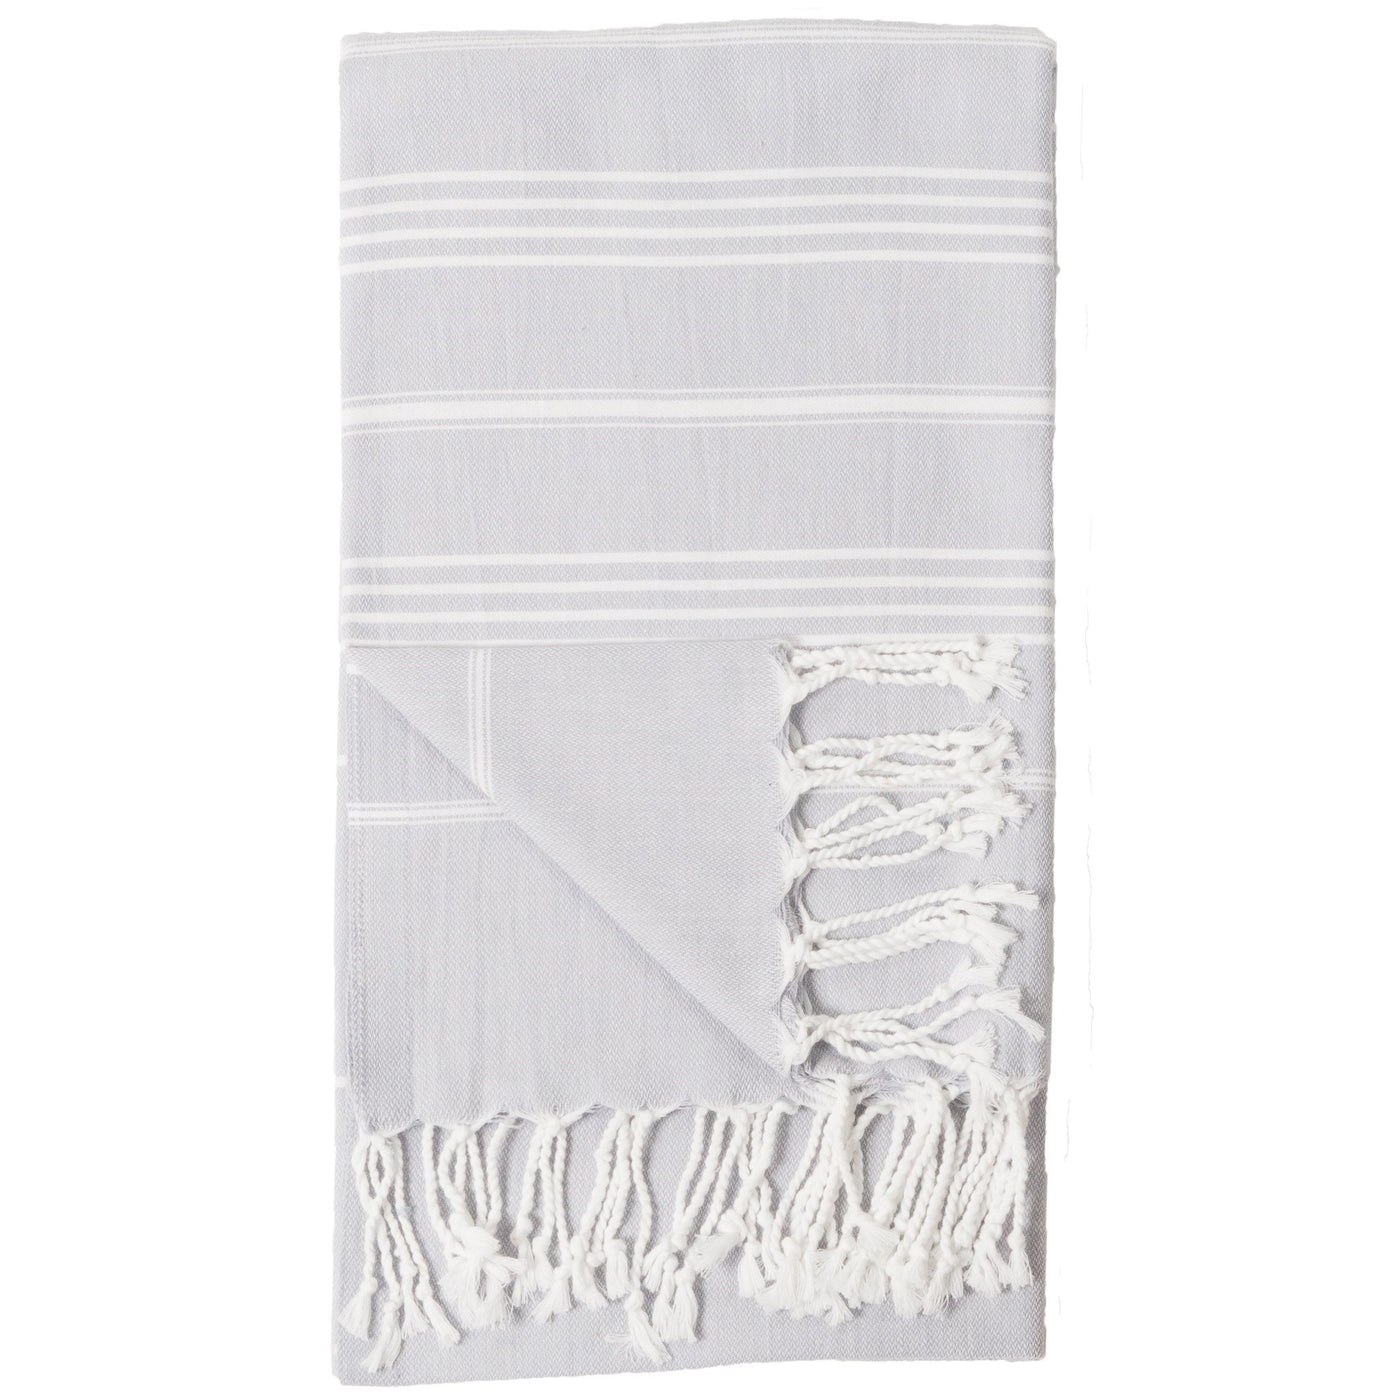 Sultan Turkish Towel, Mist